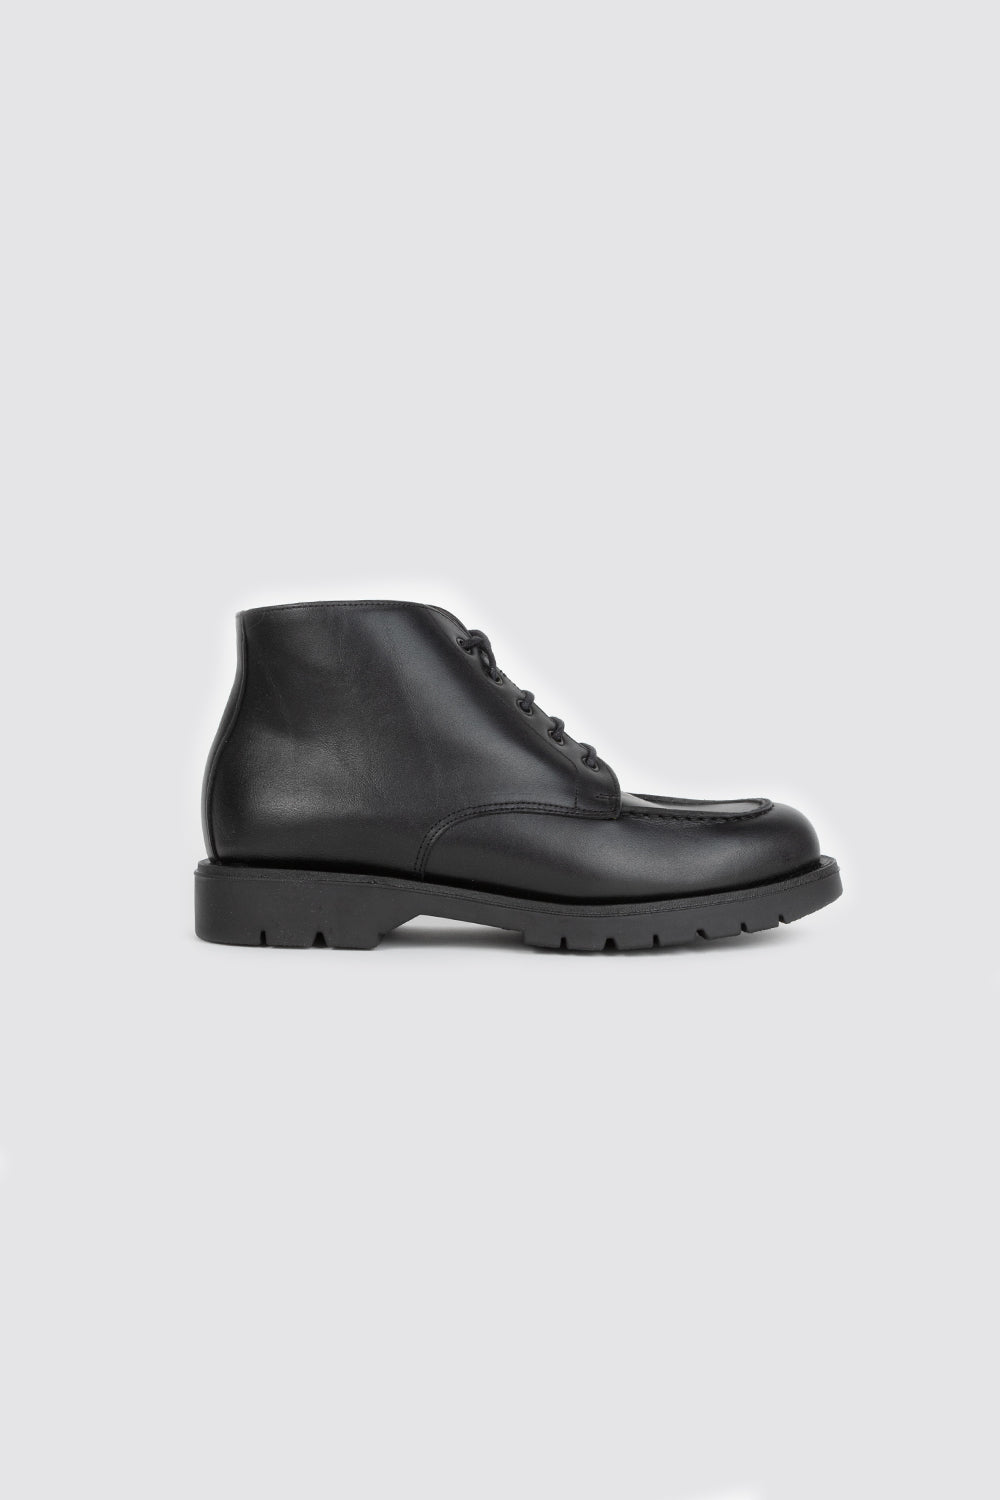 kleman oxal boots black